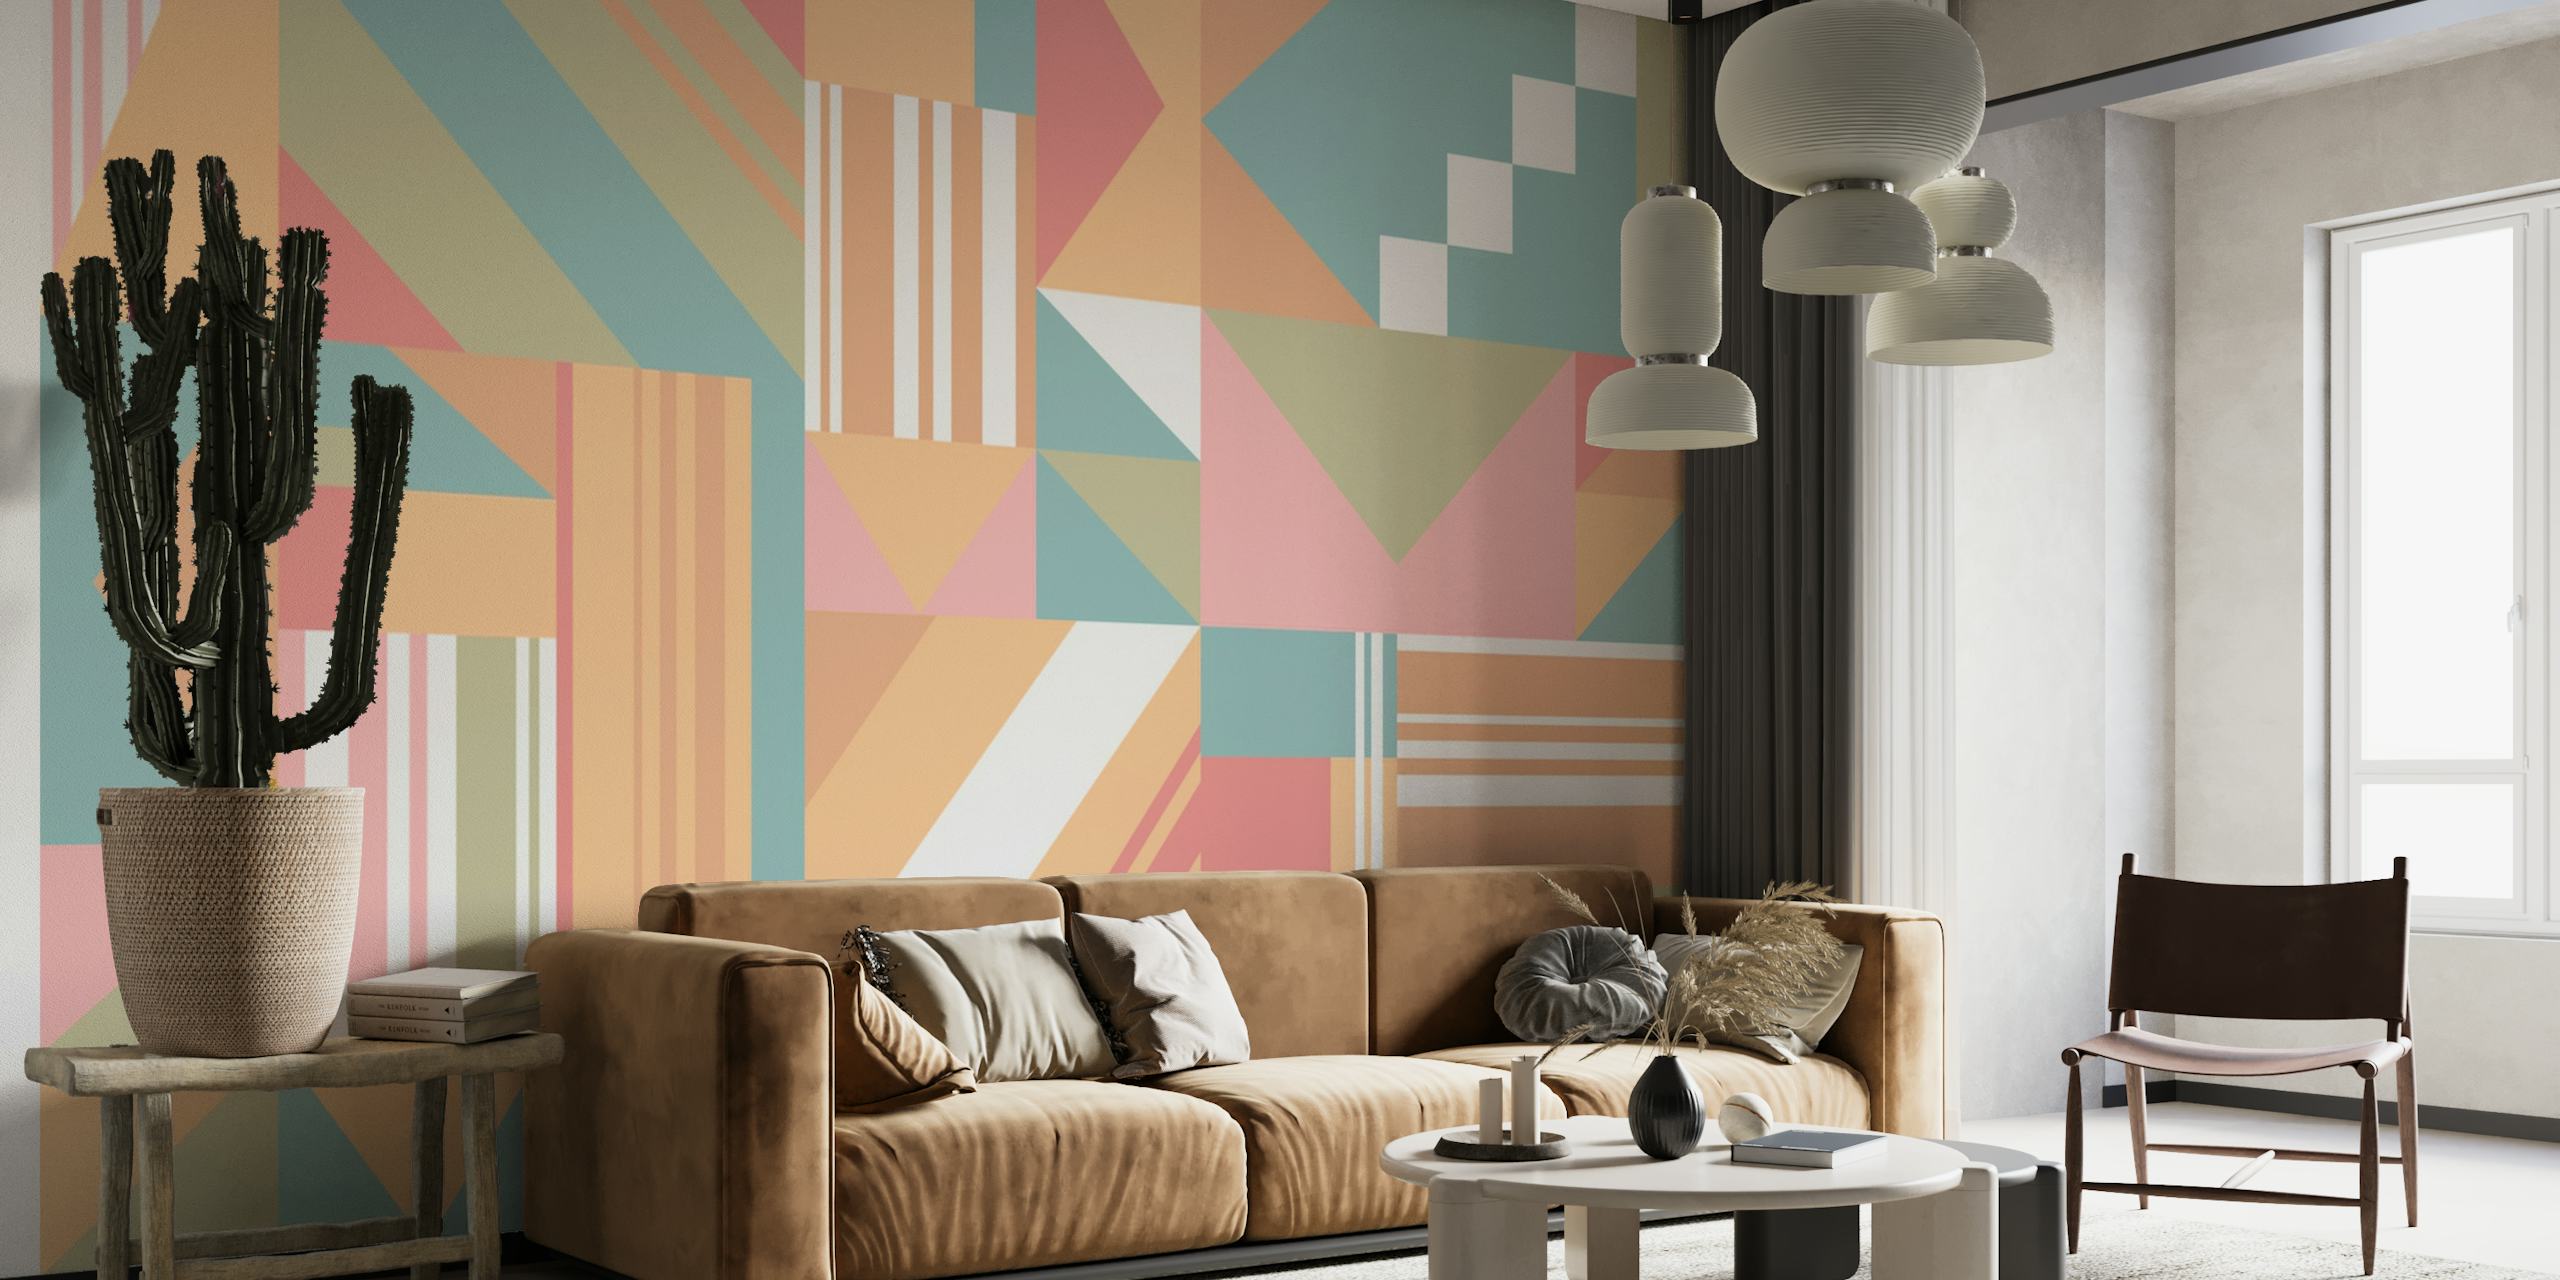 Abstrakt geometrisk mønster vægmaleri med pastelfarver